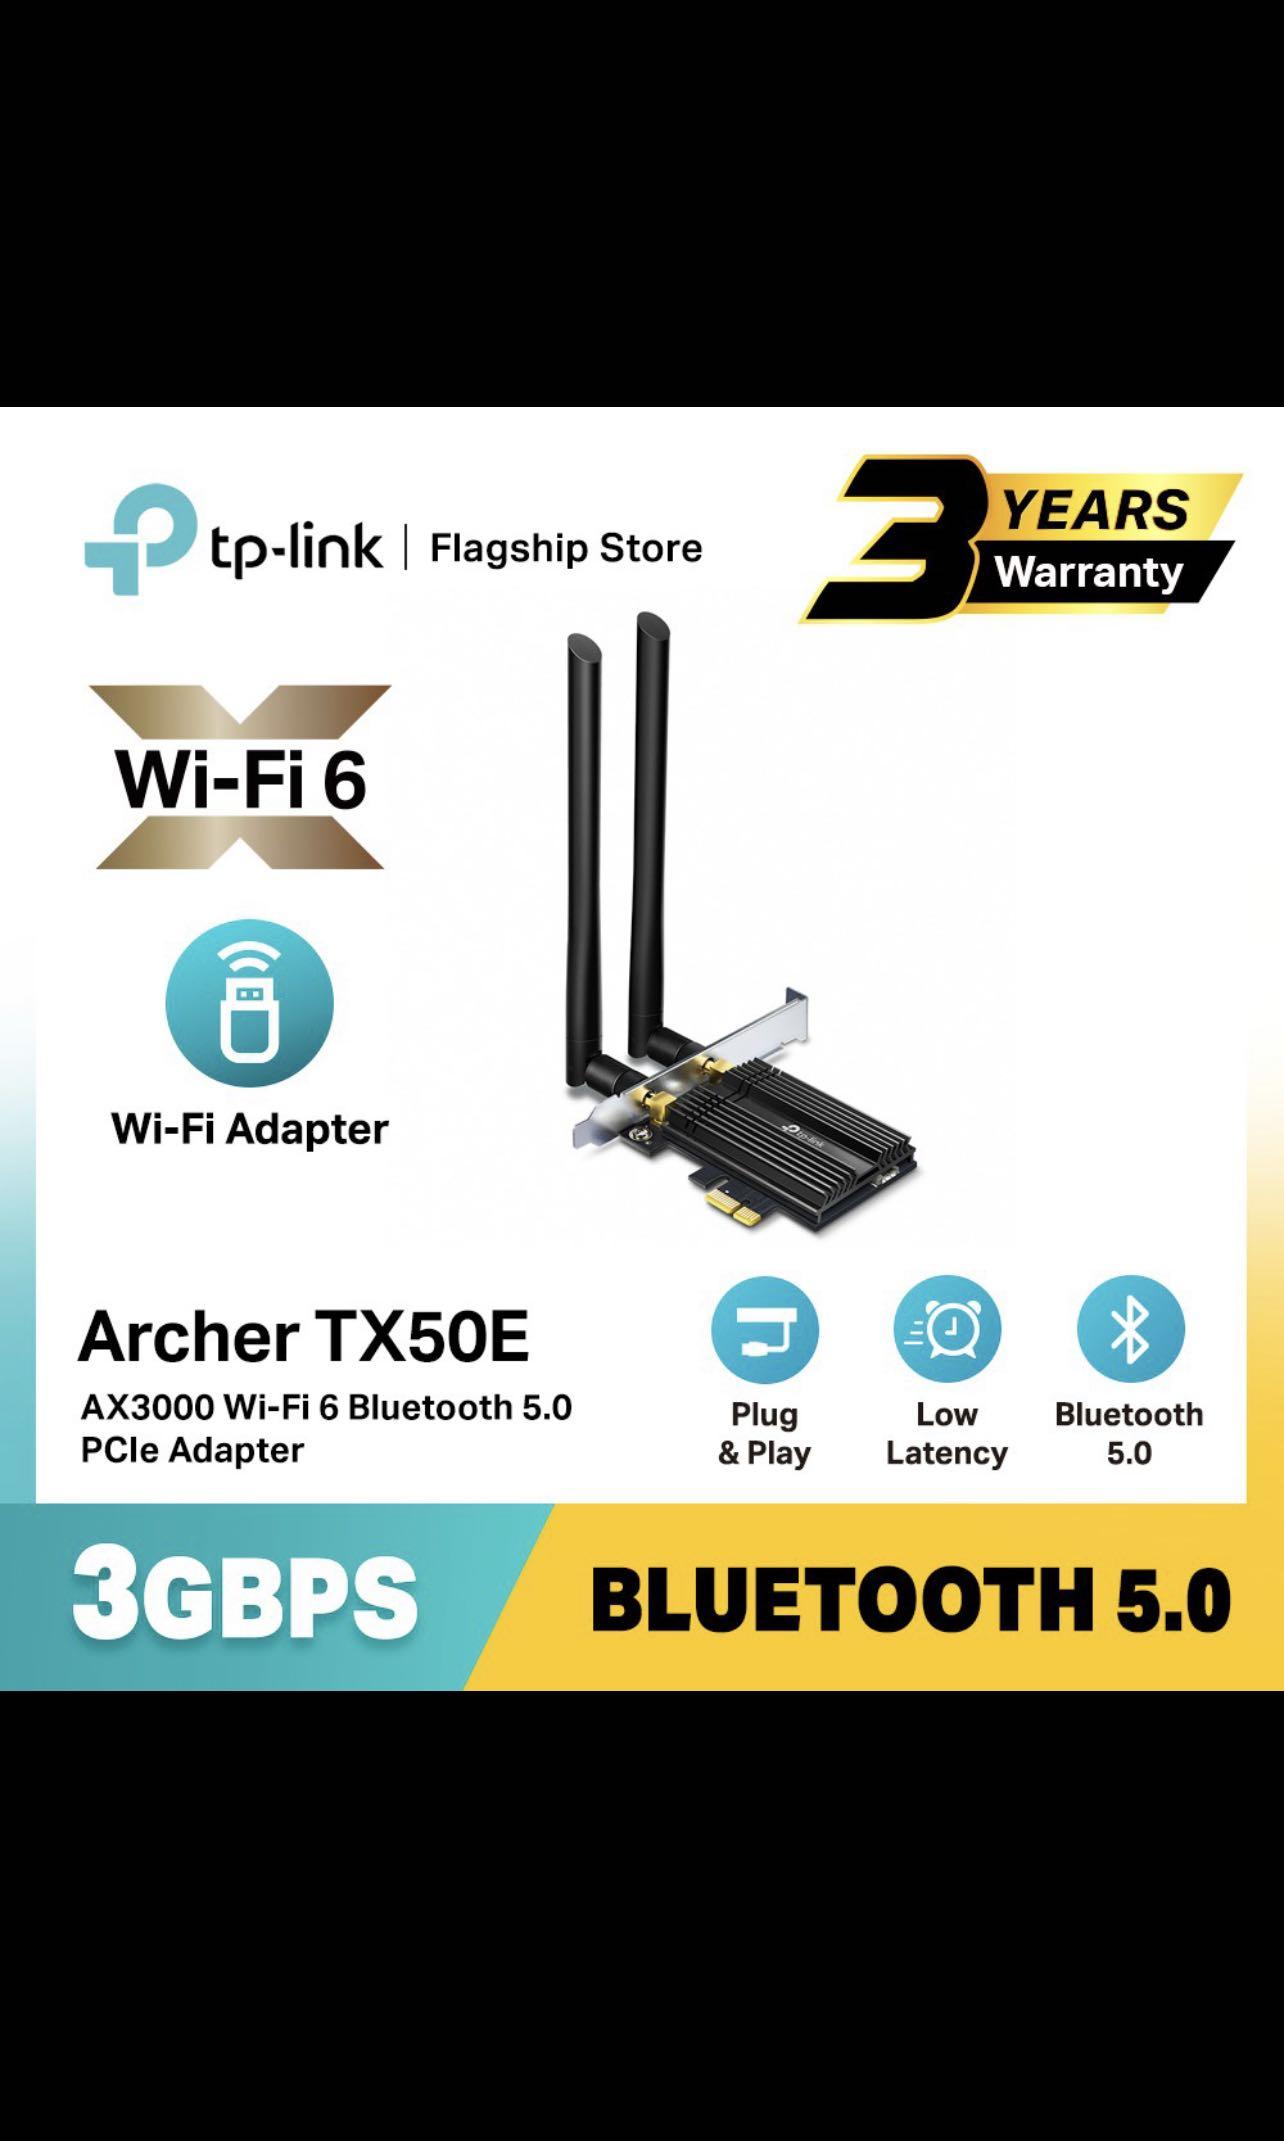 Archer TX50E, AX3000 Wi-Fi 6 Bluetooth 5.0 PCIe Adapter